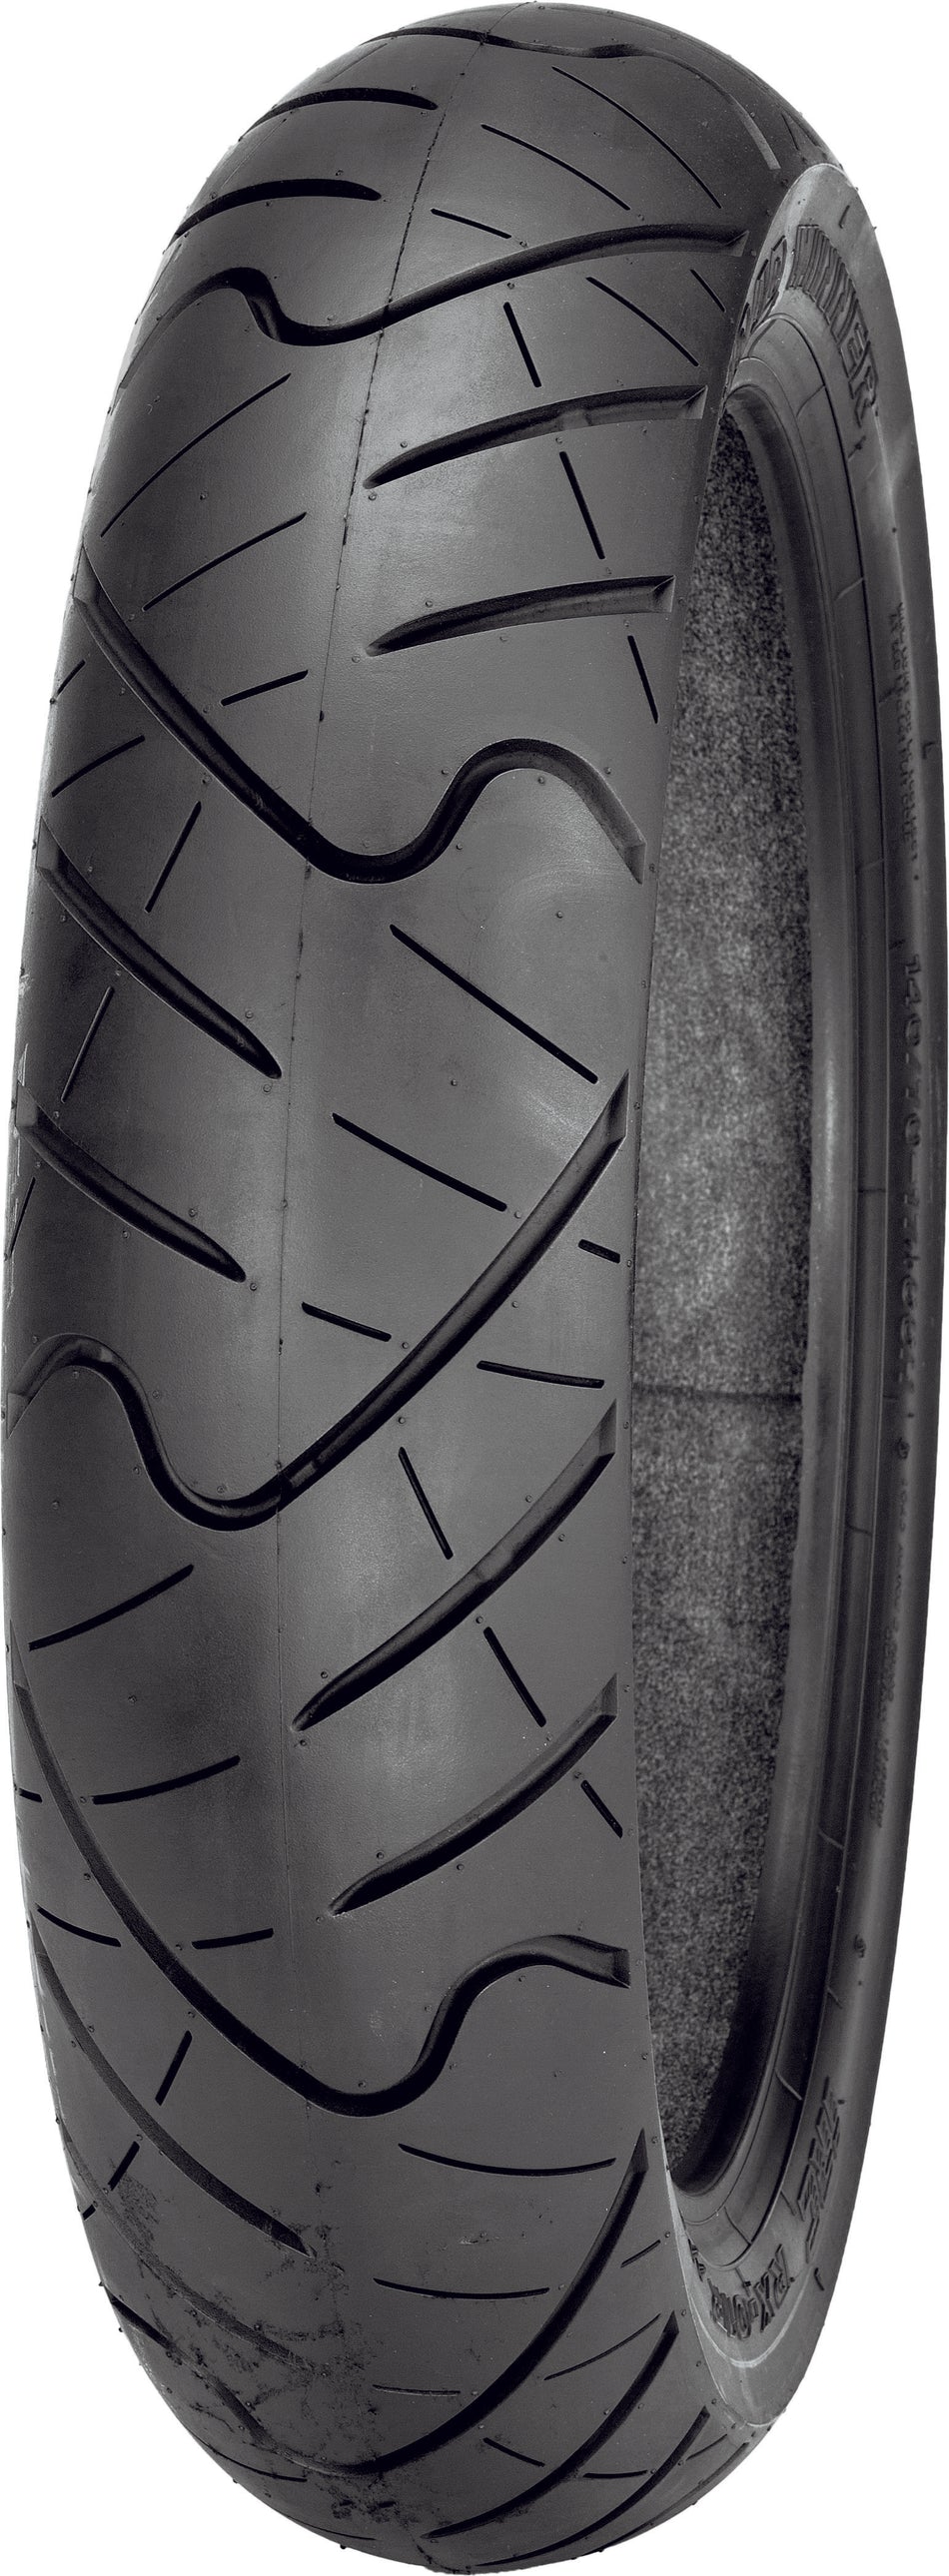 IRC Tire Rx-01 Rear 130/70-17 62s Bias T10284